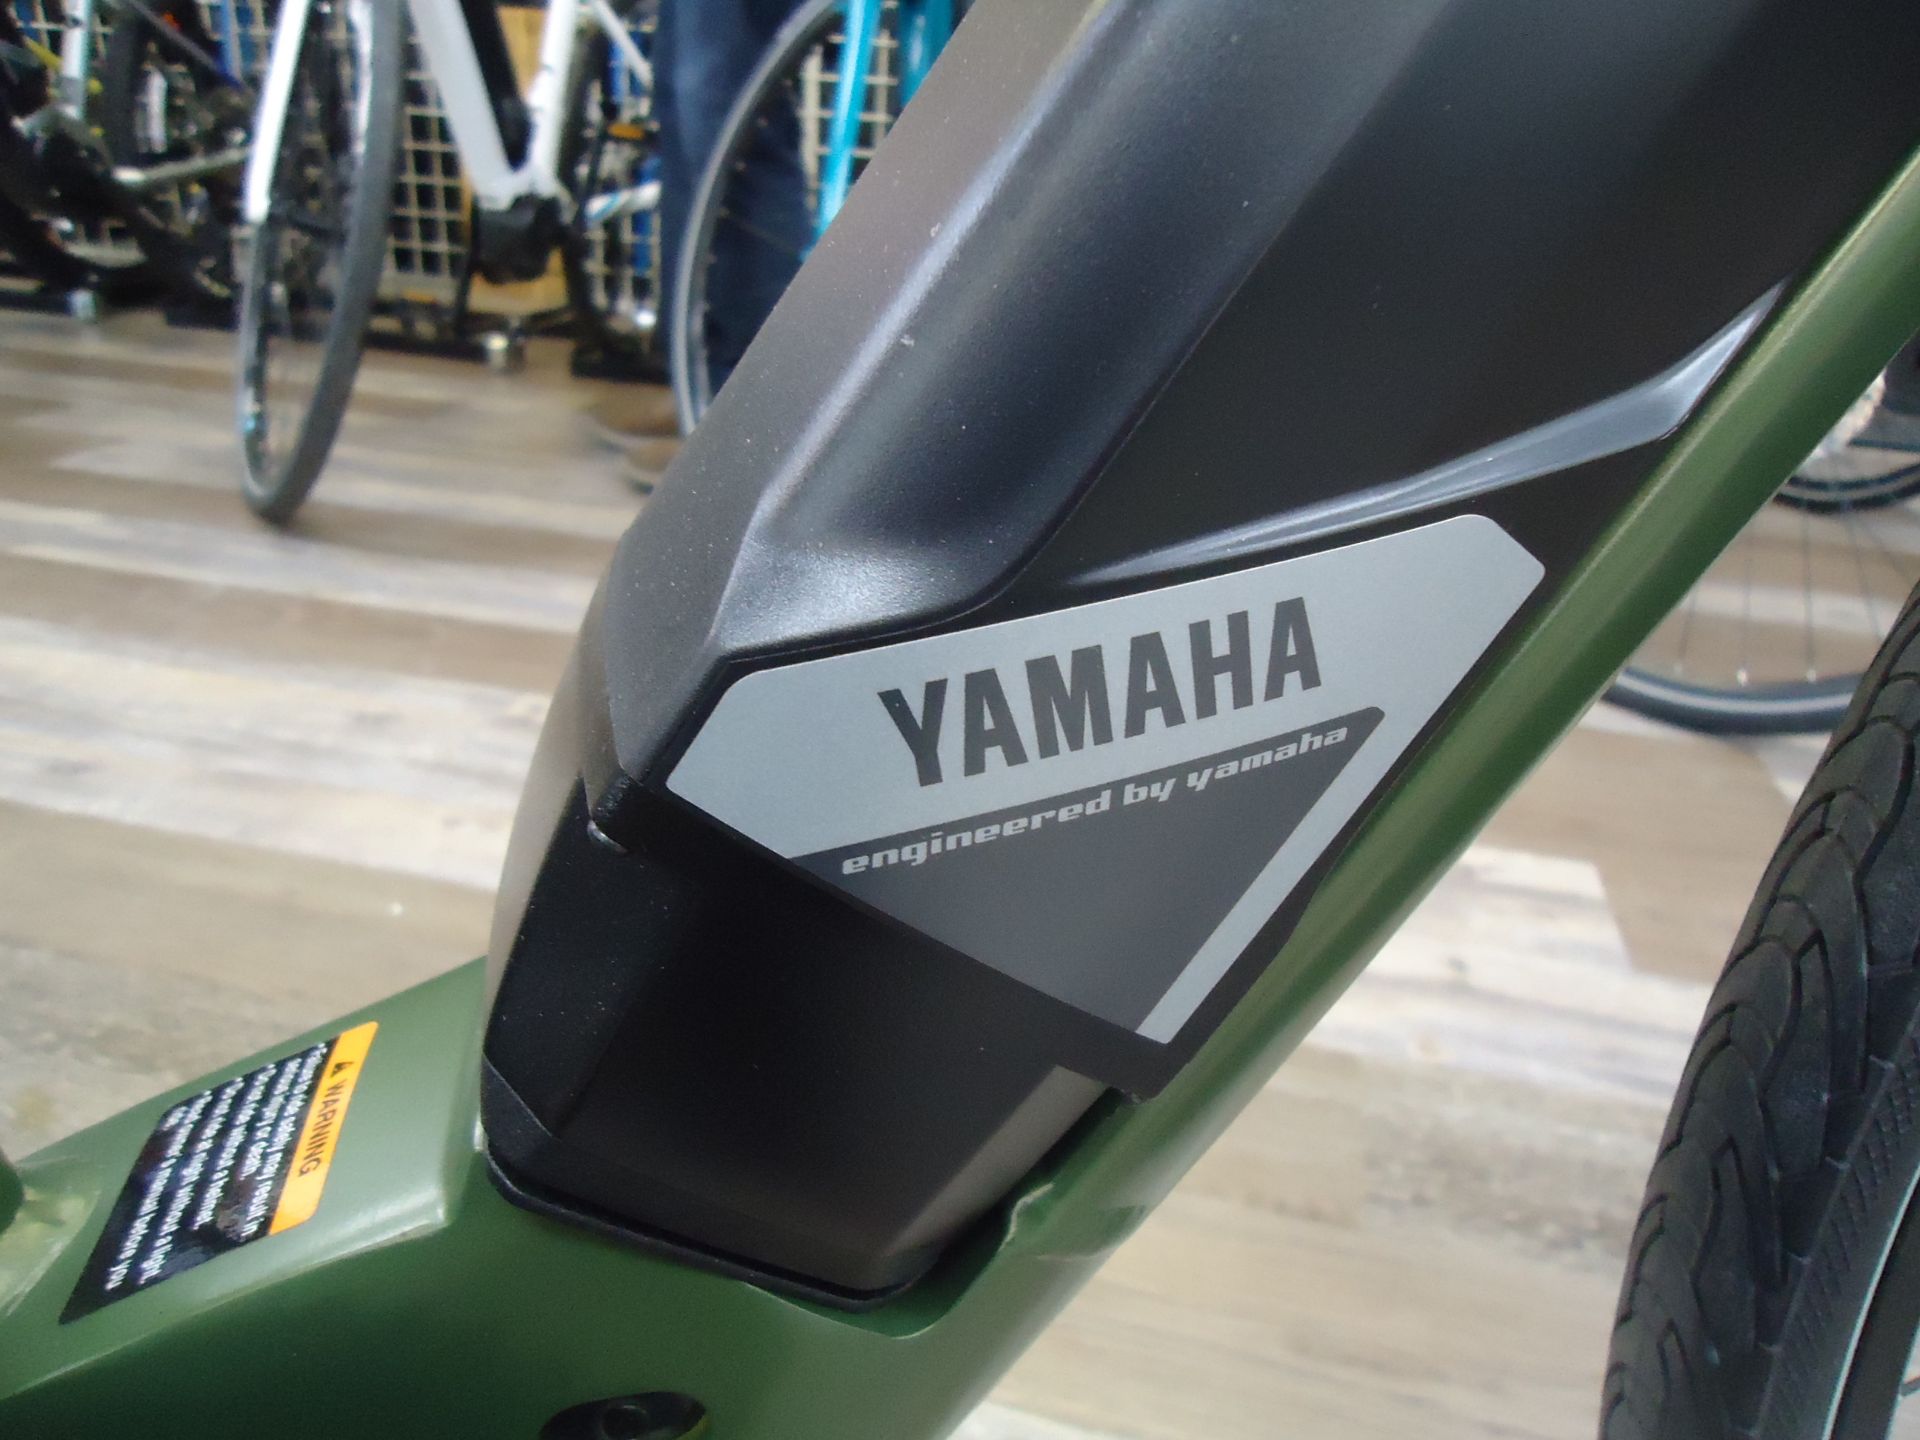 2022 Yamaha CrossCore - Large in Denver, Colorado - Photo 10